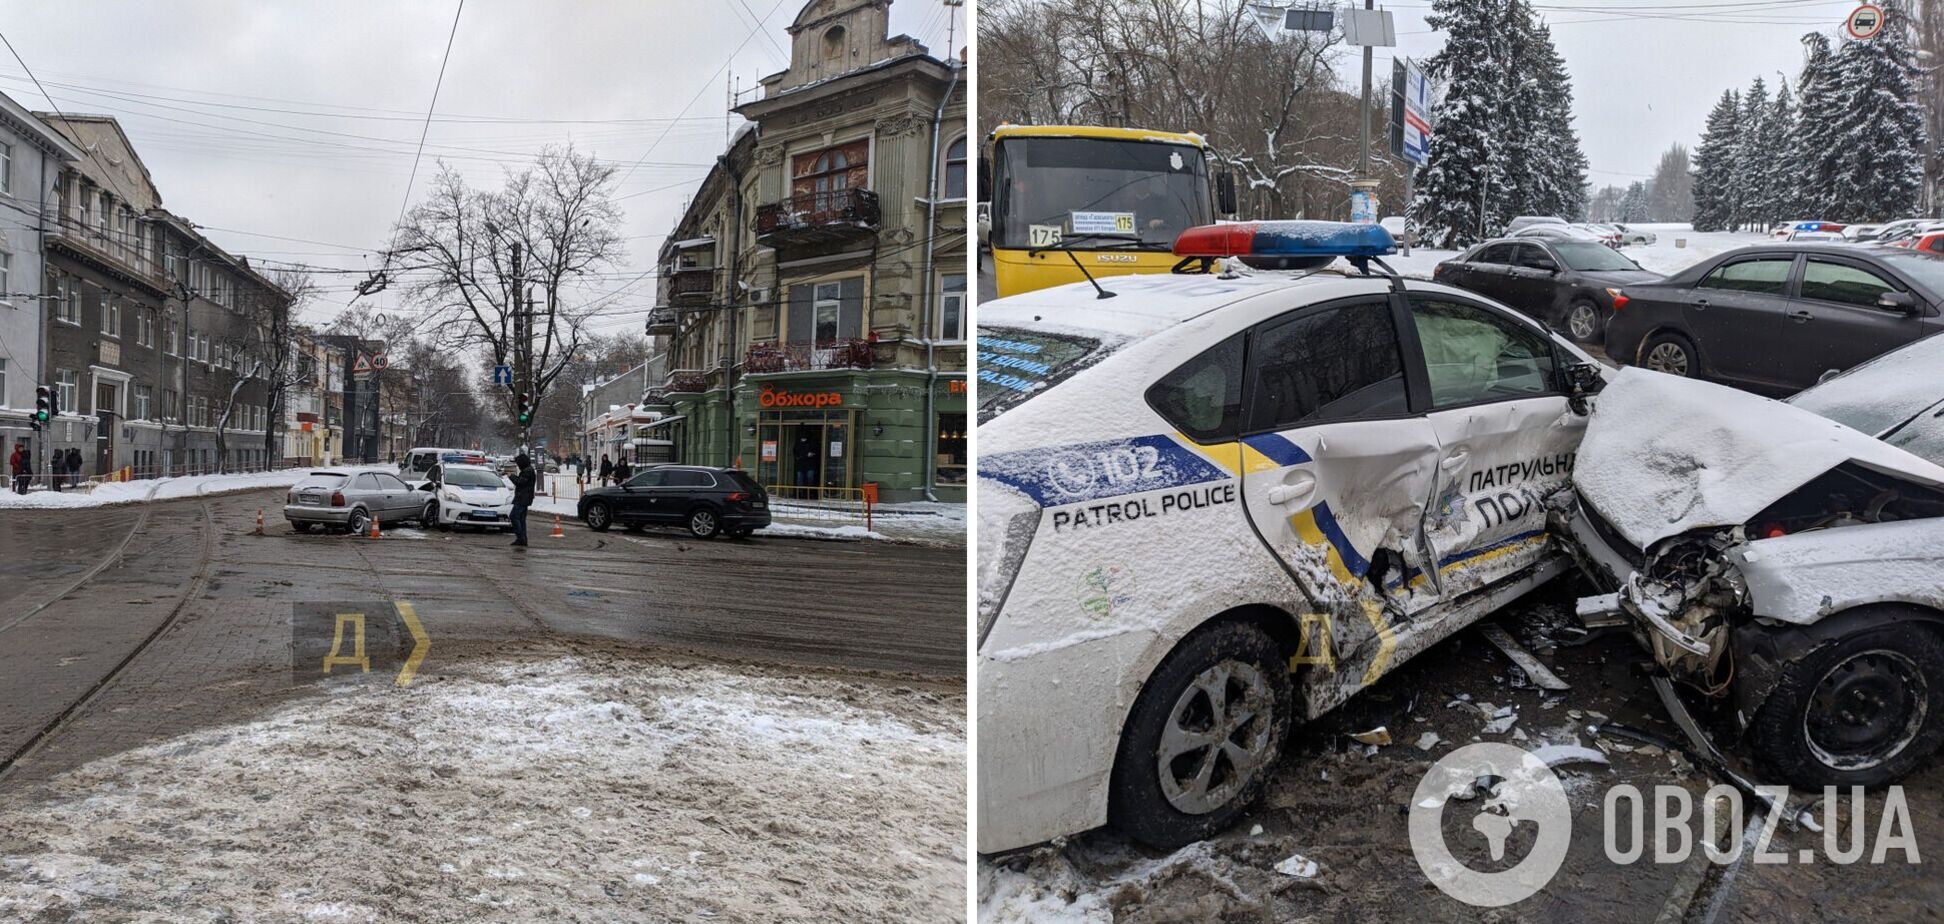 В Одессе Honda на скорости влетела в авто полиции. Момент аварии попал на видео